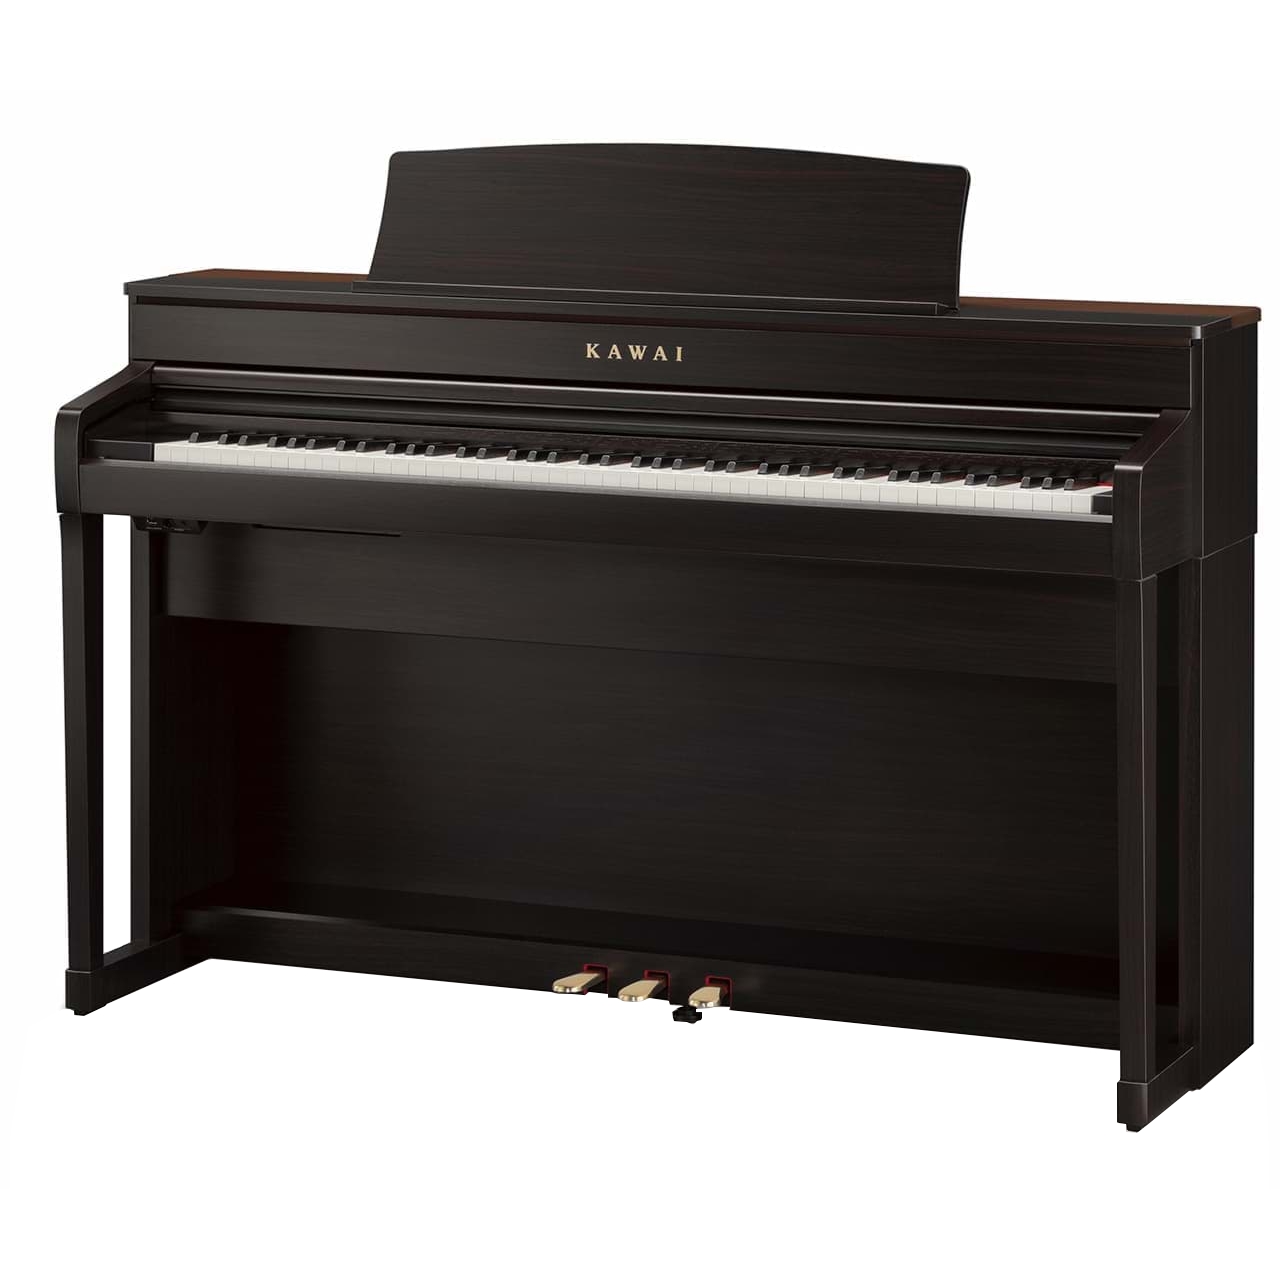 KAWAI CA79R - цифр. пианино, механика GF III, 66 тембров, 256 полифония, 50 вт х 2, цвет палисандр